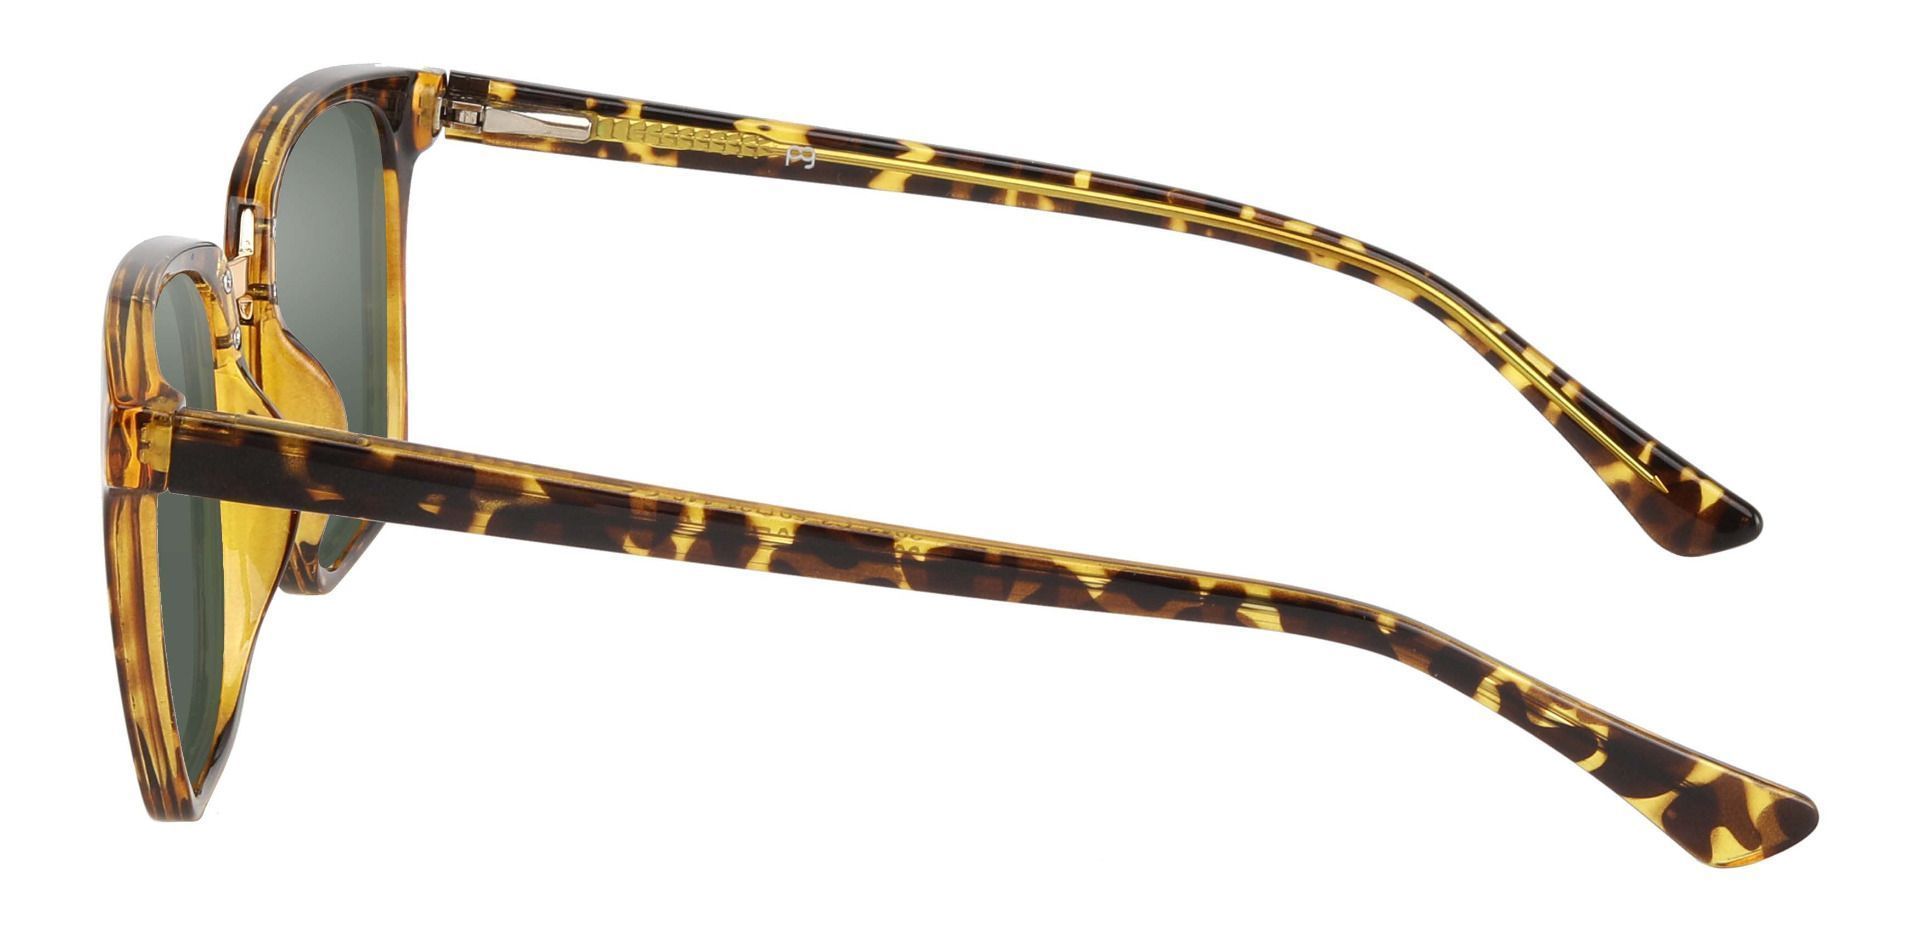 Delta Square Lined Bifocal Sunglasses - Tortoise Frame With Green Lenses